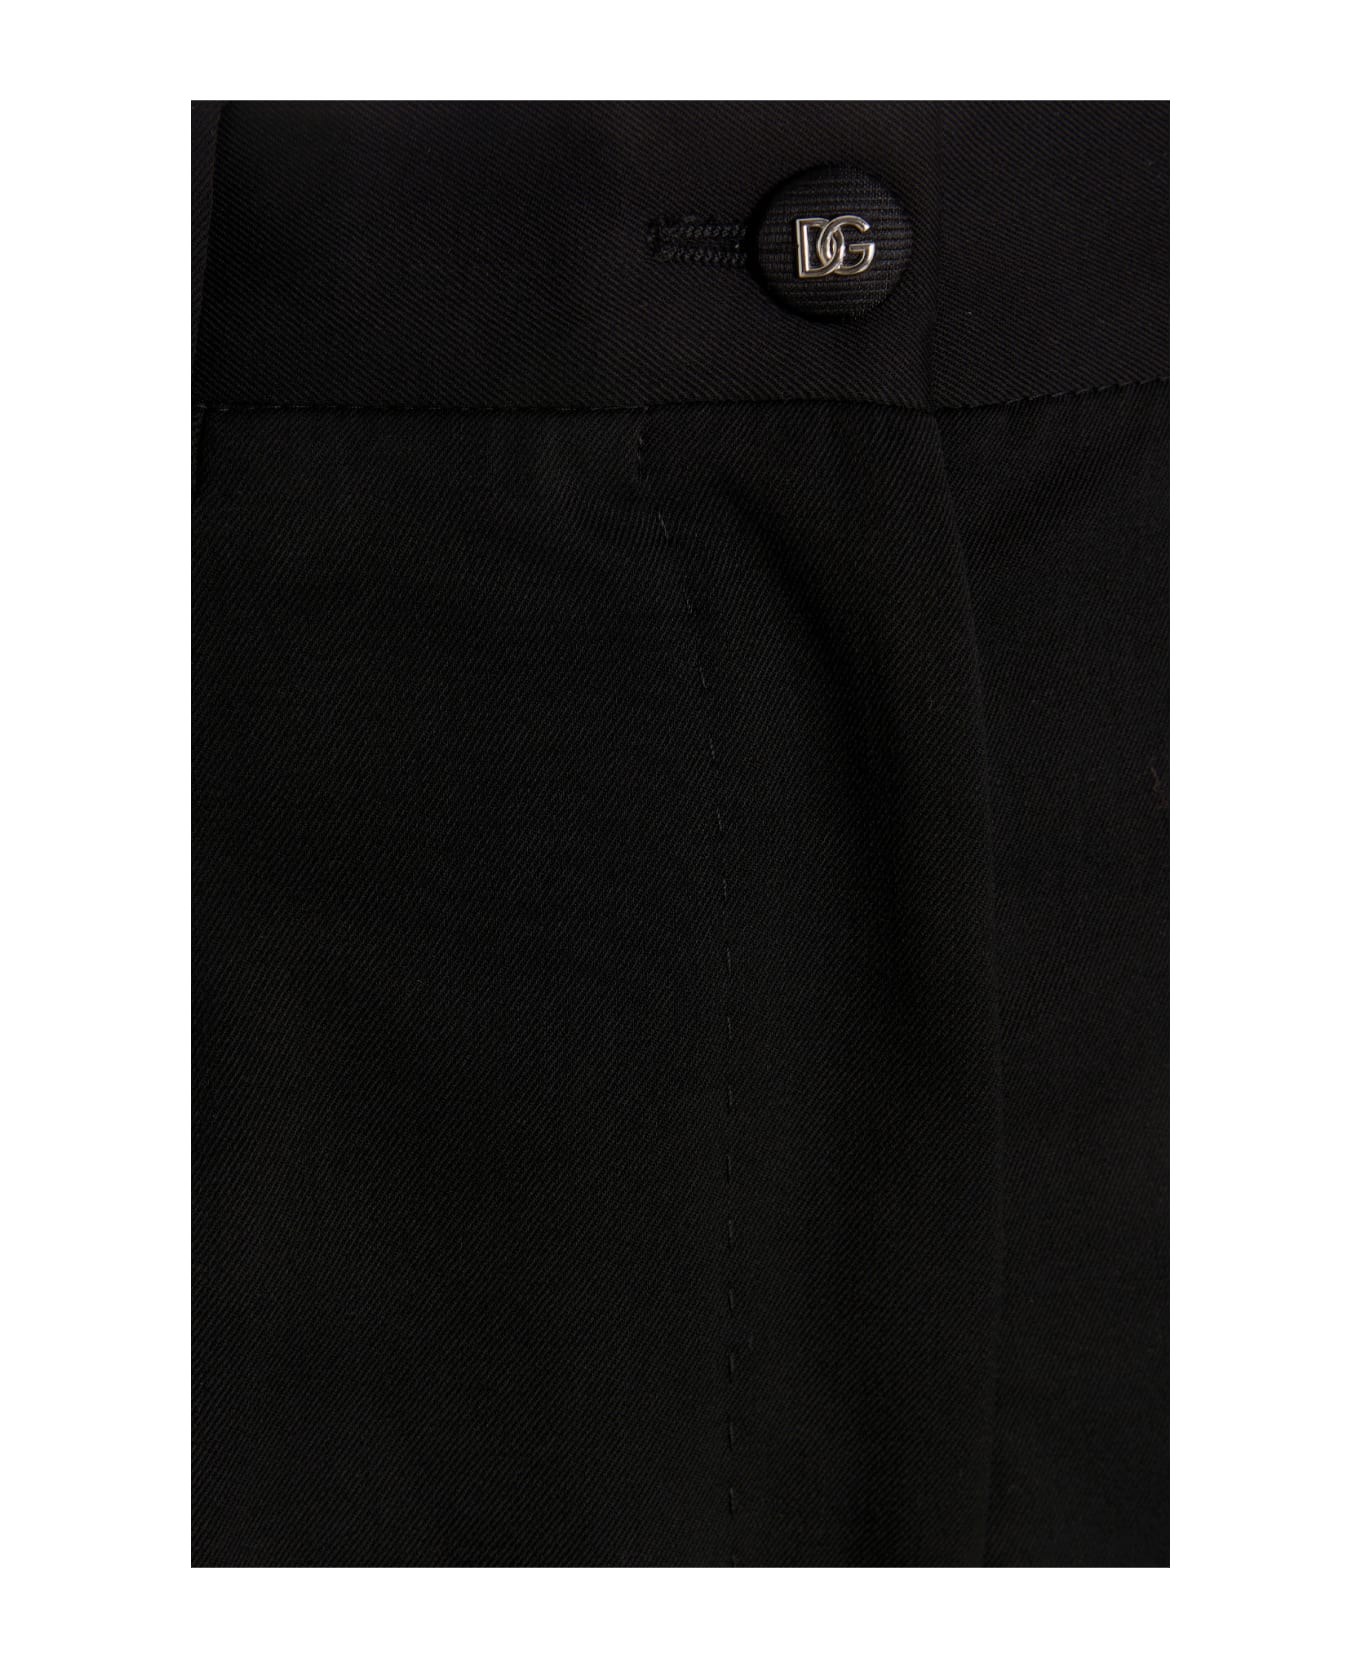 Dolce & Gabbana Virgin Wool Tailored Trousers - black ボトムス